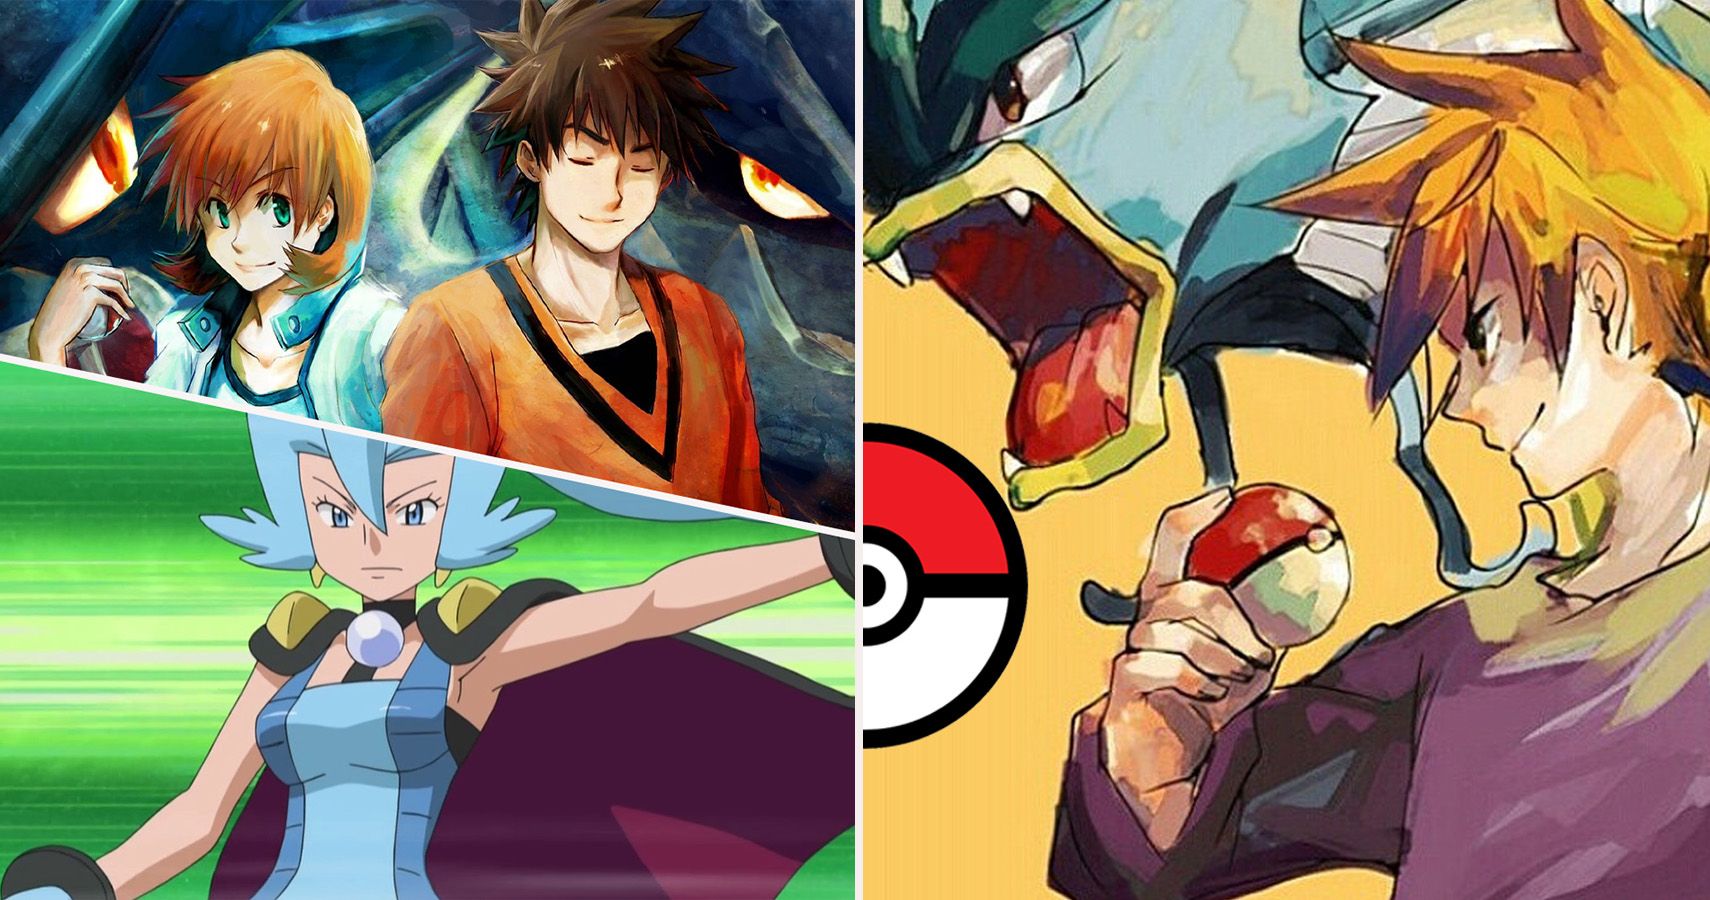 Pokémon: Every Single Gym Leader From Weakest To Most Powerful. www.thethin...